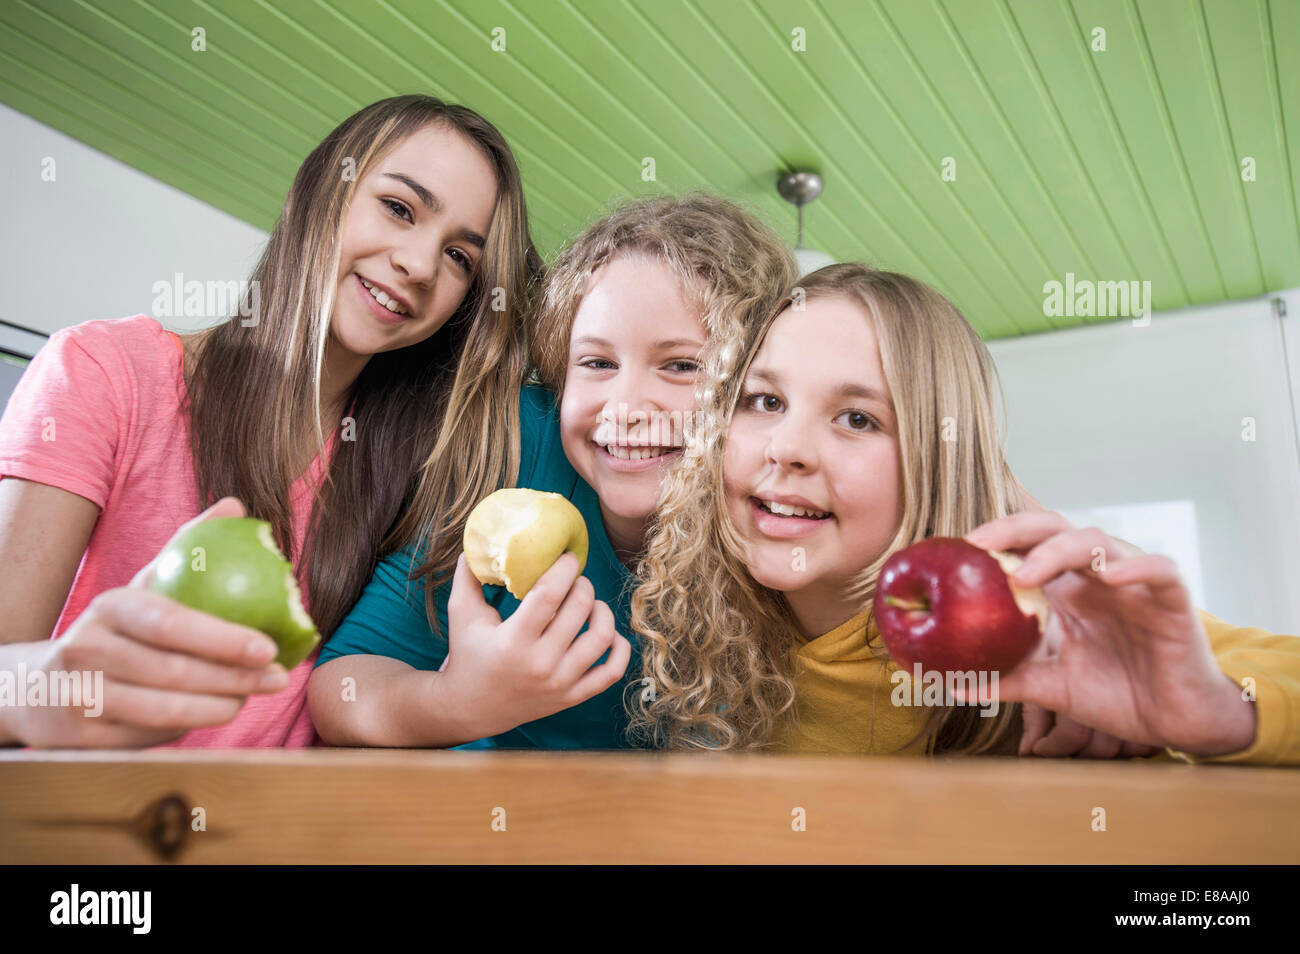 Ragazze in cucina a mangiare le mele Foto Stock